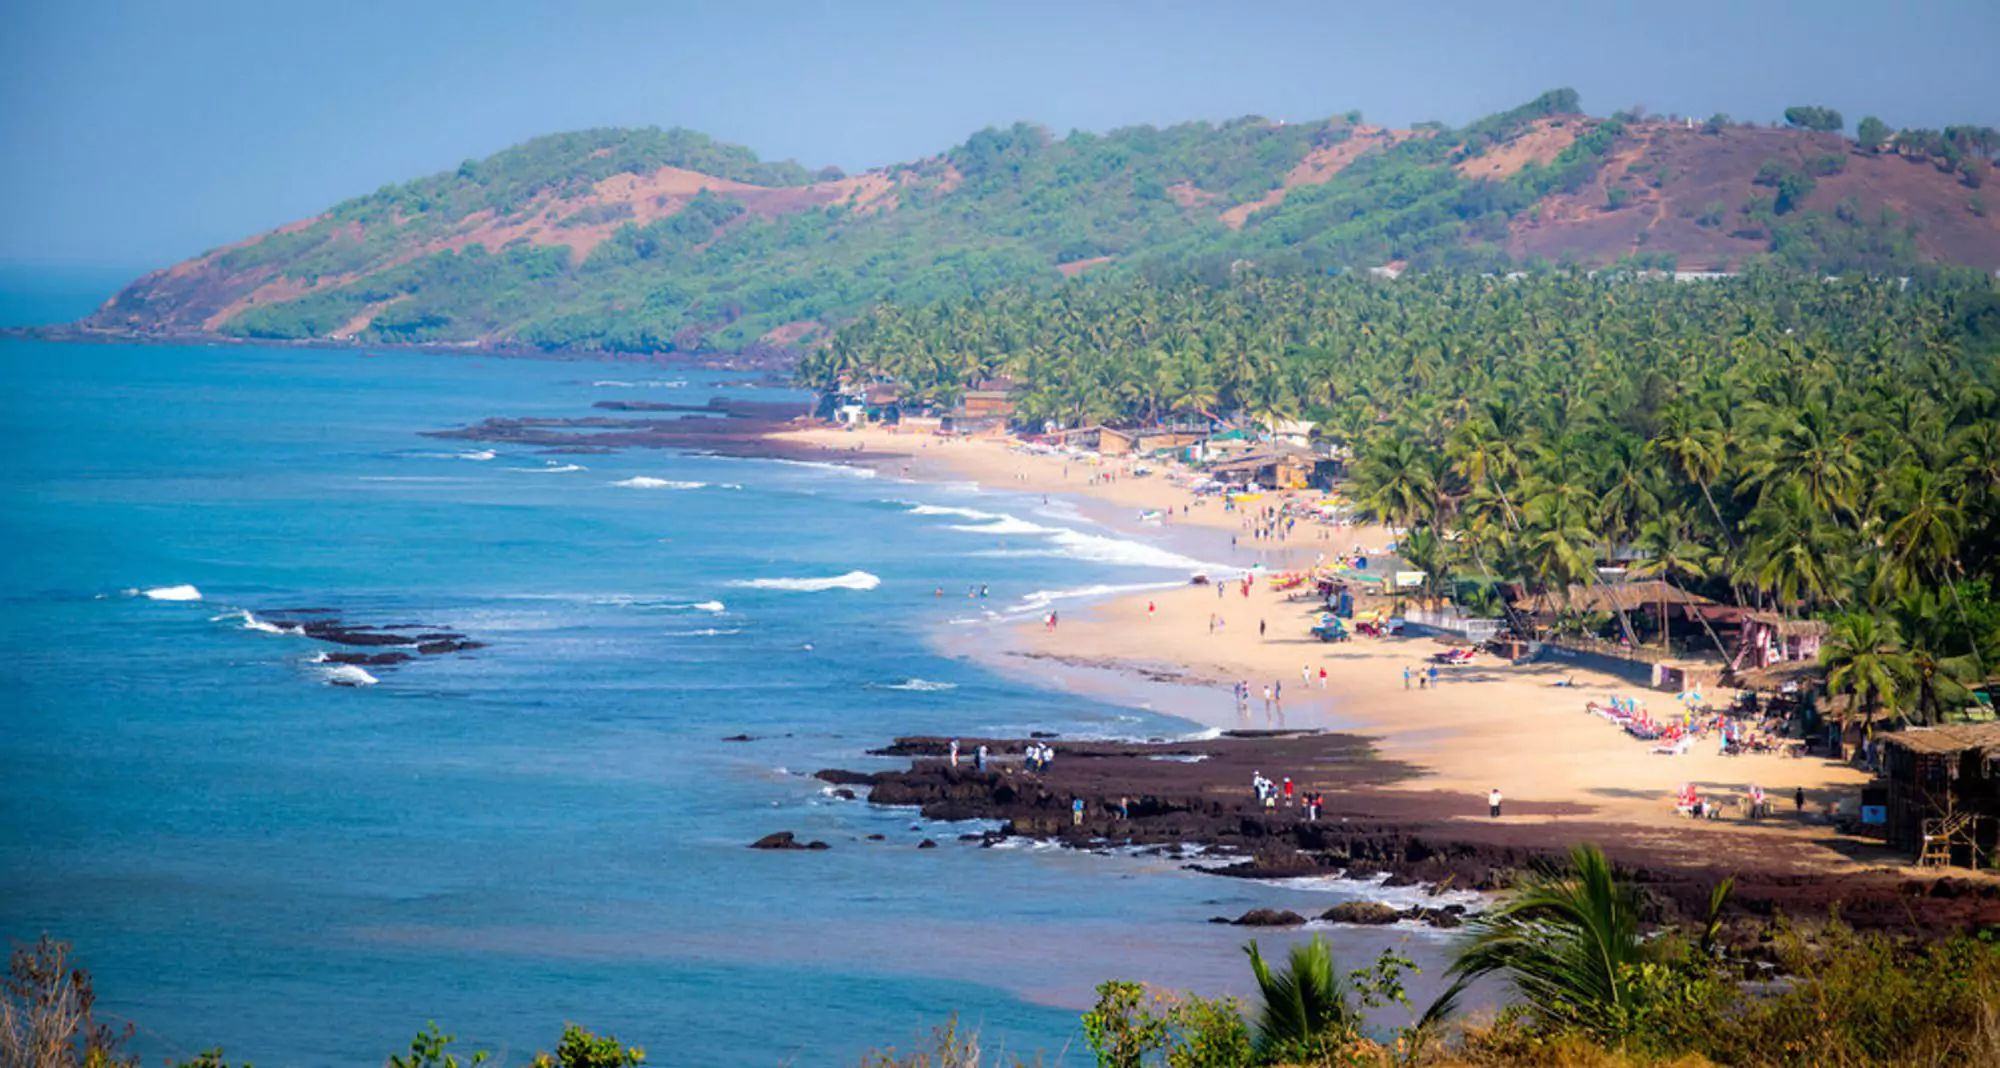 Top Beaches In Goa – Anjuna Beach For Water Sports